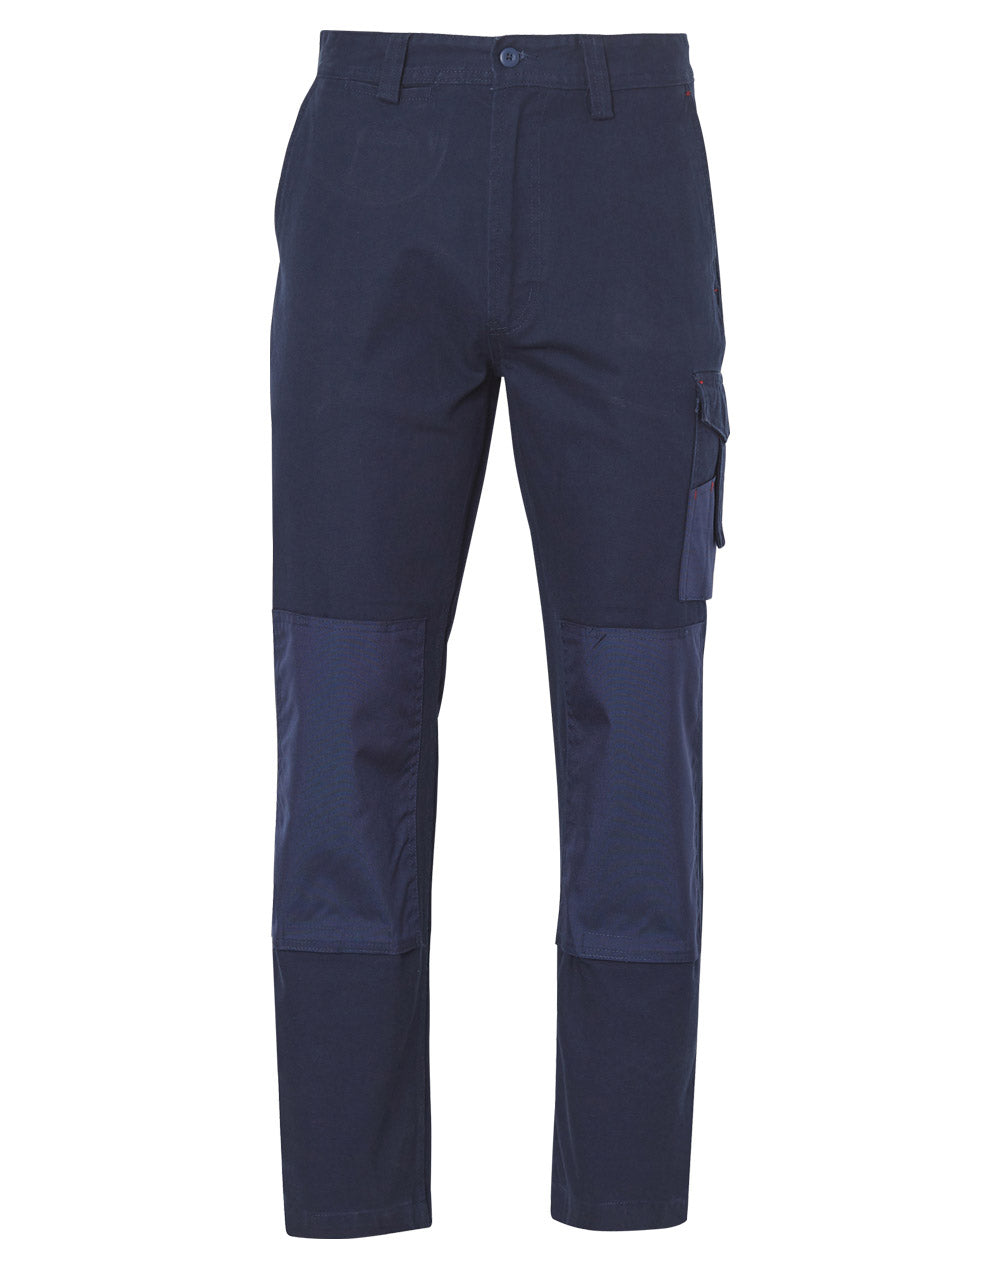 Winning Spirit-Men's Cordura Durable Work Pants Stout Size-WP17